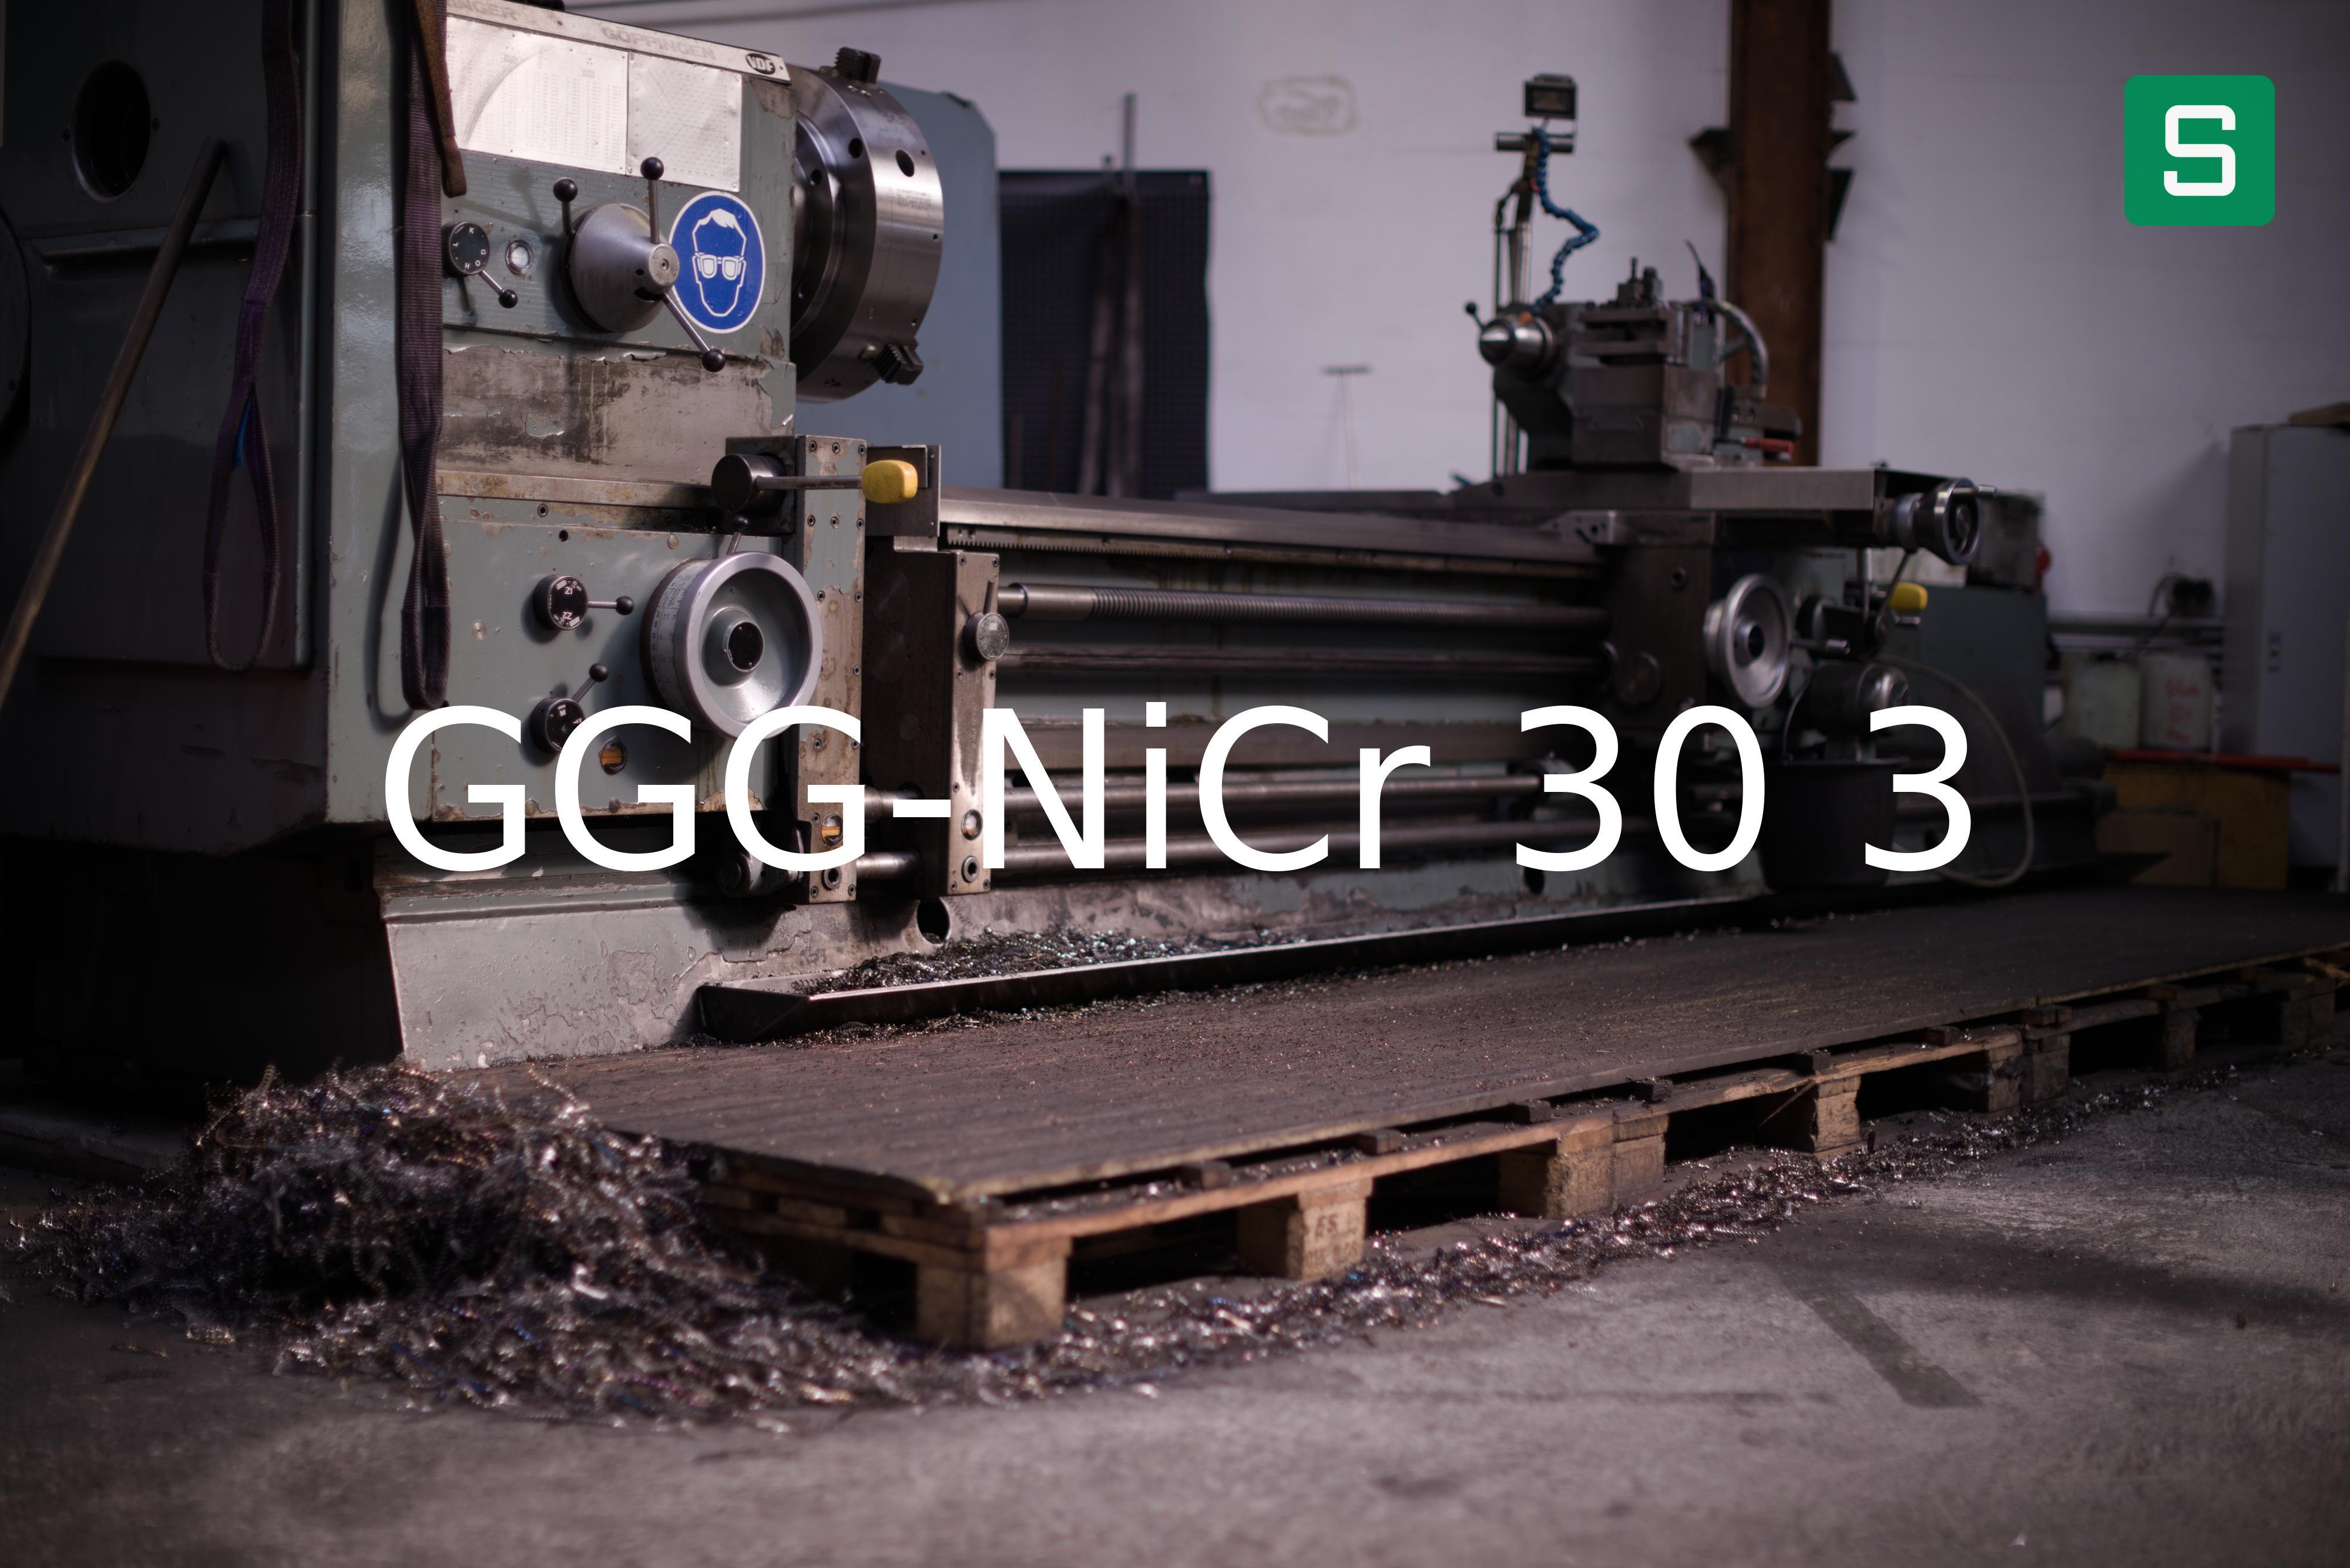 Steel Material: GGG-NiCr 30 3